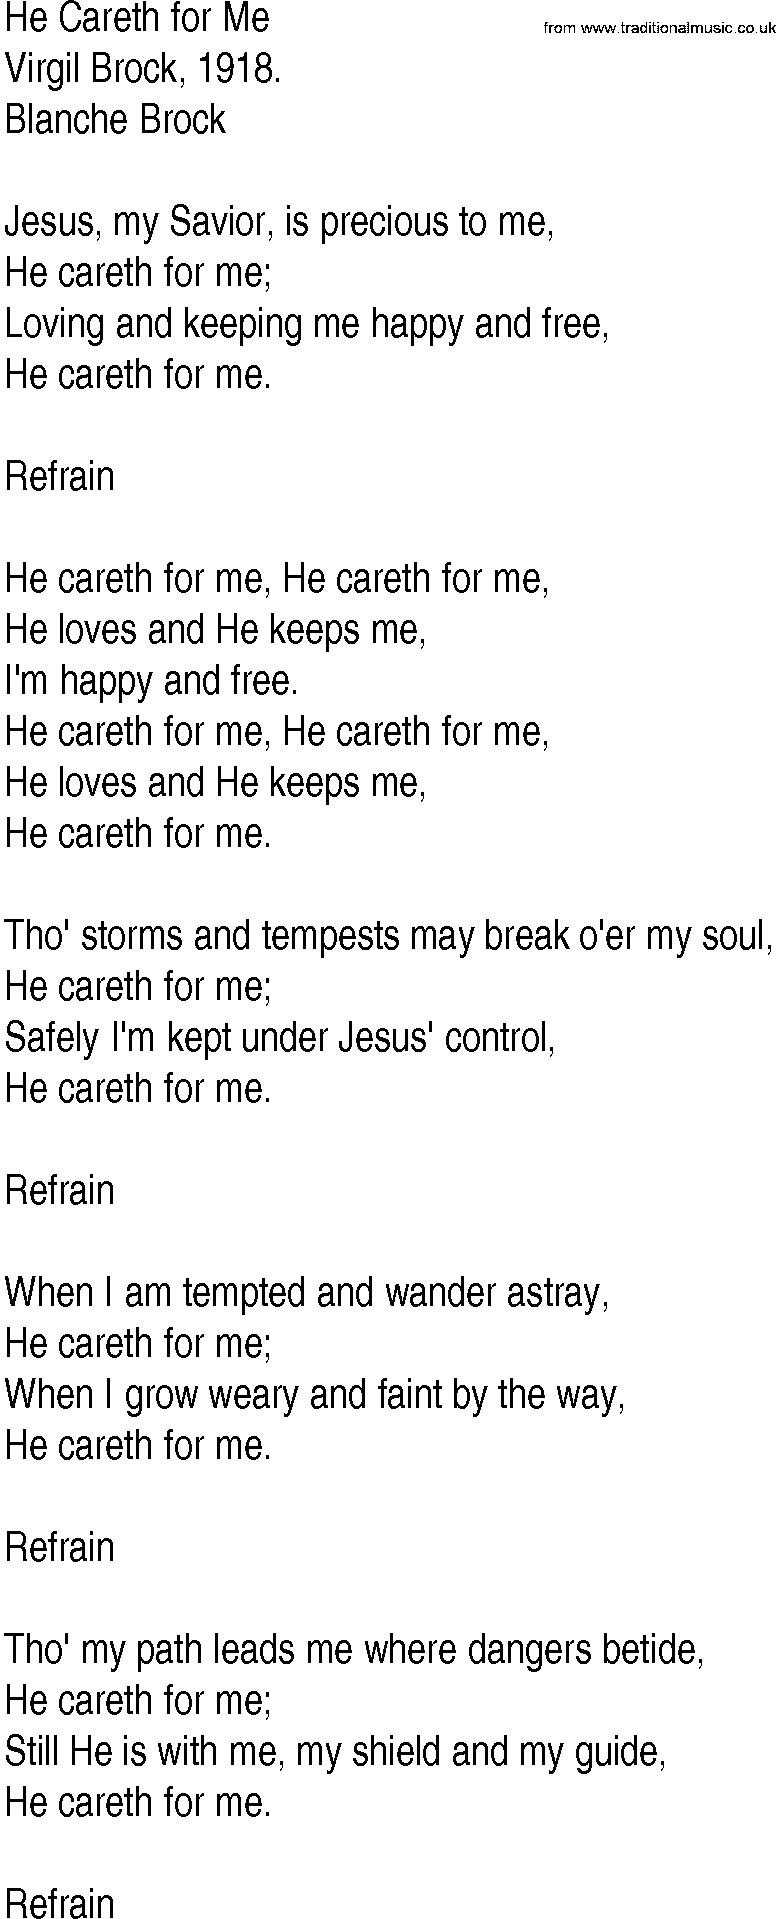 Hymn and Gospel Song: He Careth for Me by Virgil Brock lyrics